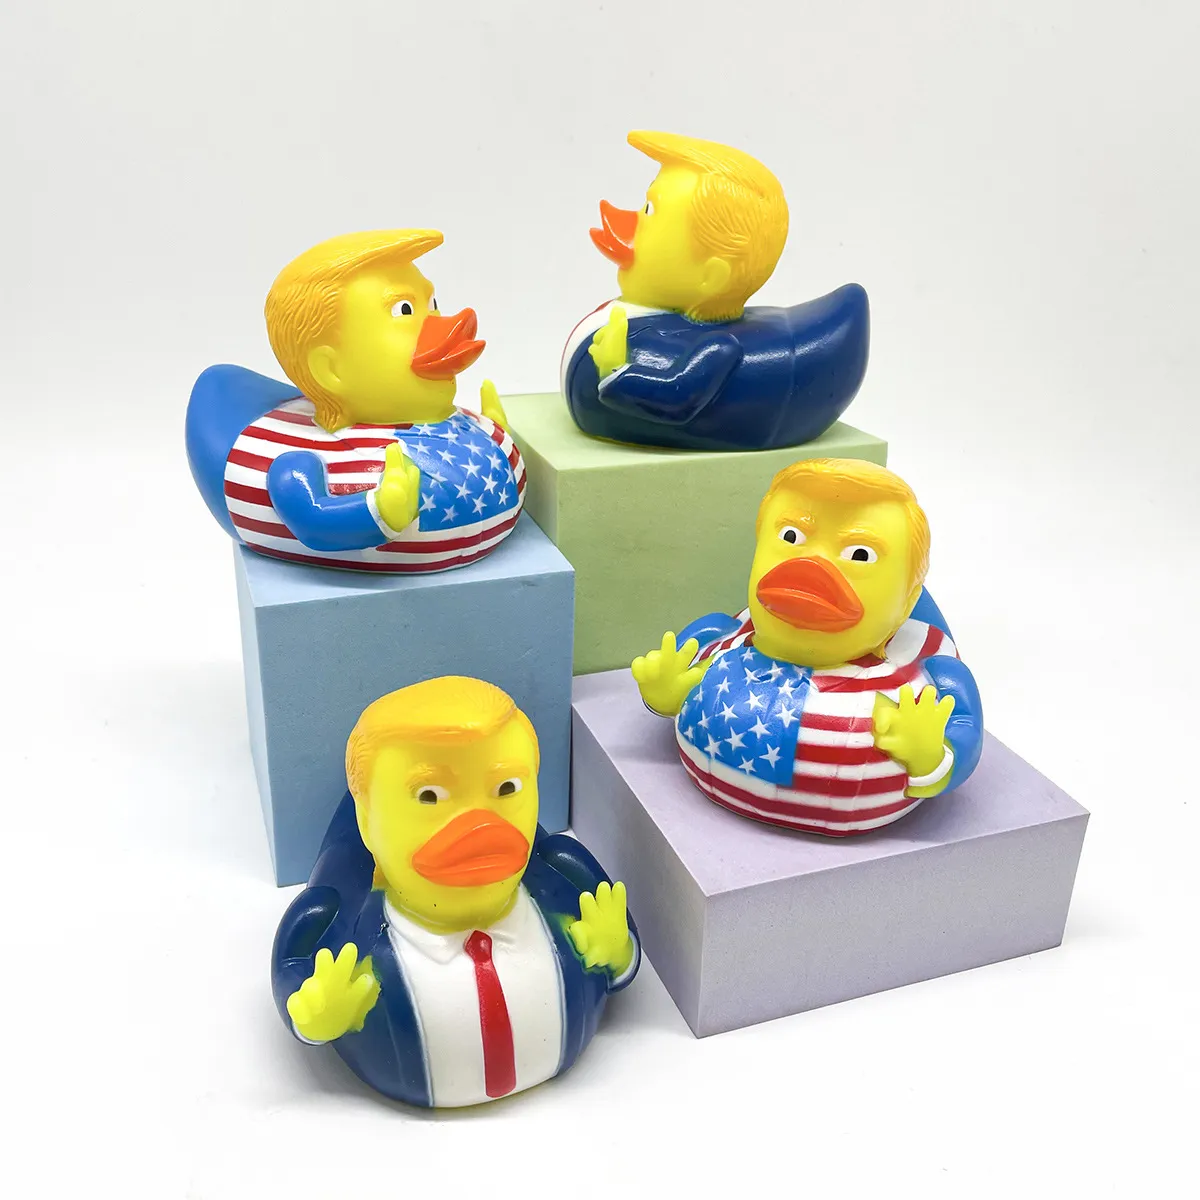 Trump Rubber Duck Baby Bath Floating Water Toy Duck Cute Pvc Ducks Roliga anka leksaker för barn Gift Party Favor FY3683 0306